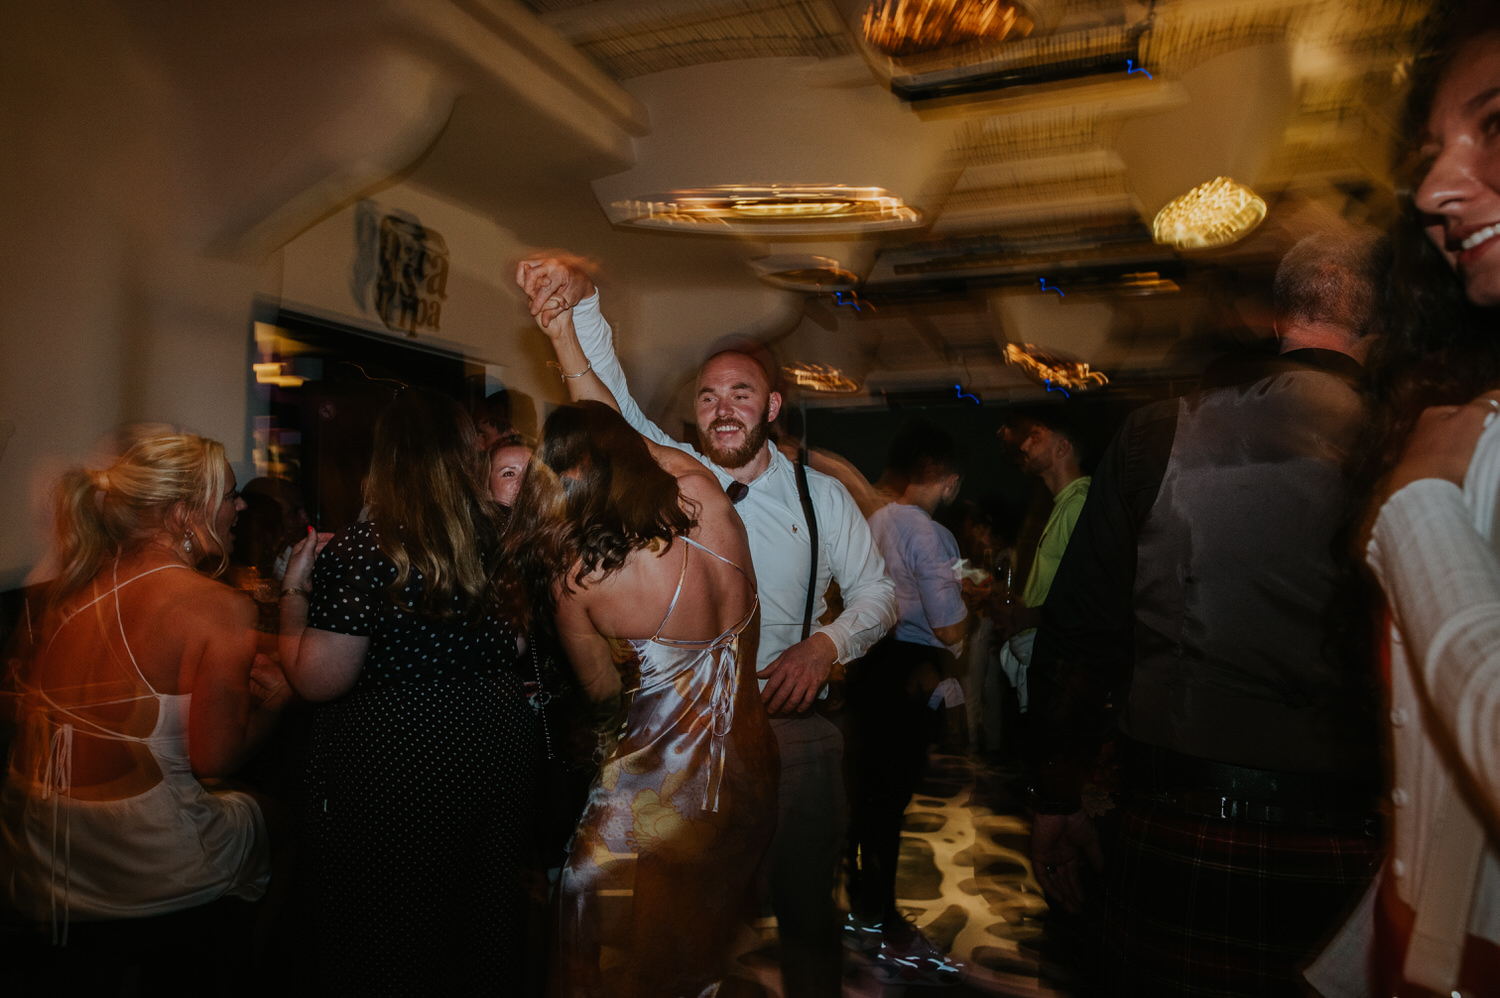 Mykonos wedding photographer: wedding guests dancing and spinning on the dance floor for Mykonos wedding celebration.